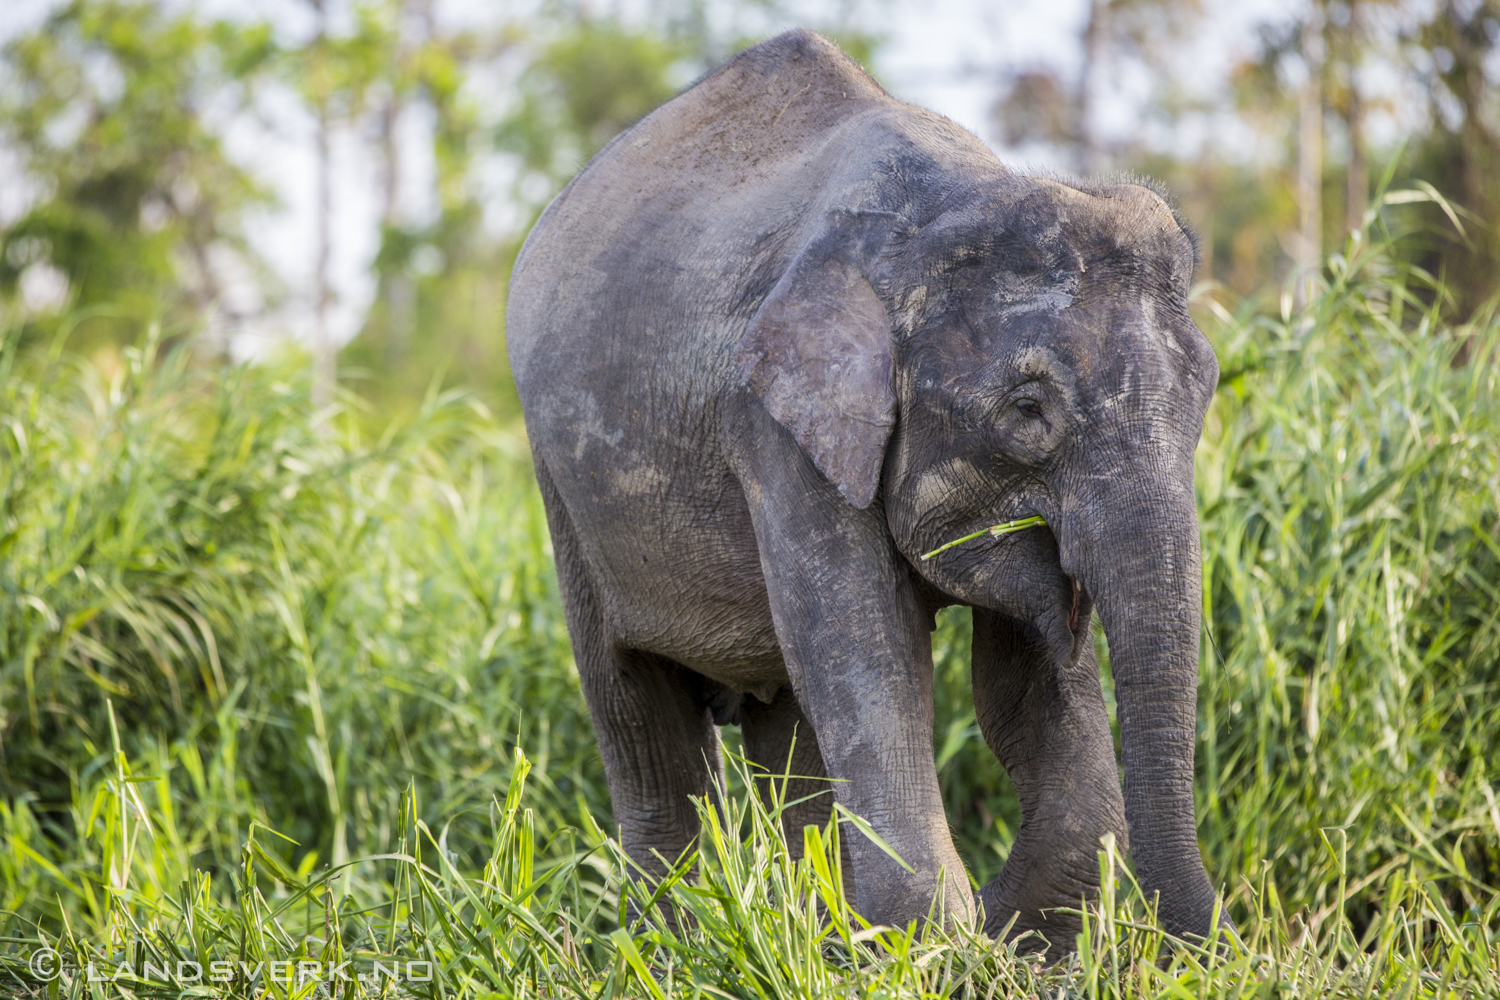 Wild Borneo pygmy elephant. Sukau, Borneo.

(Canon EOS 5D Mark III / Canon EF 70-200mm f/2.8 L IS II USM / Canon 2x EF Extender III)